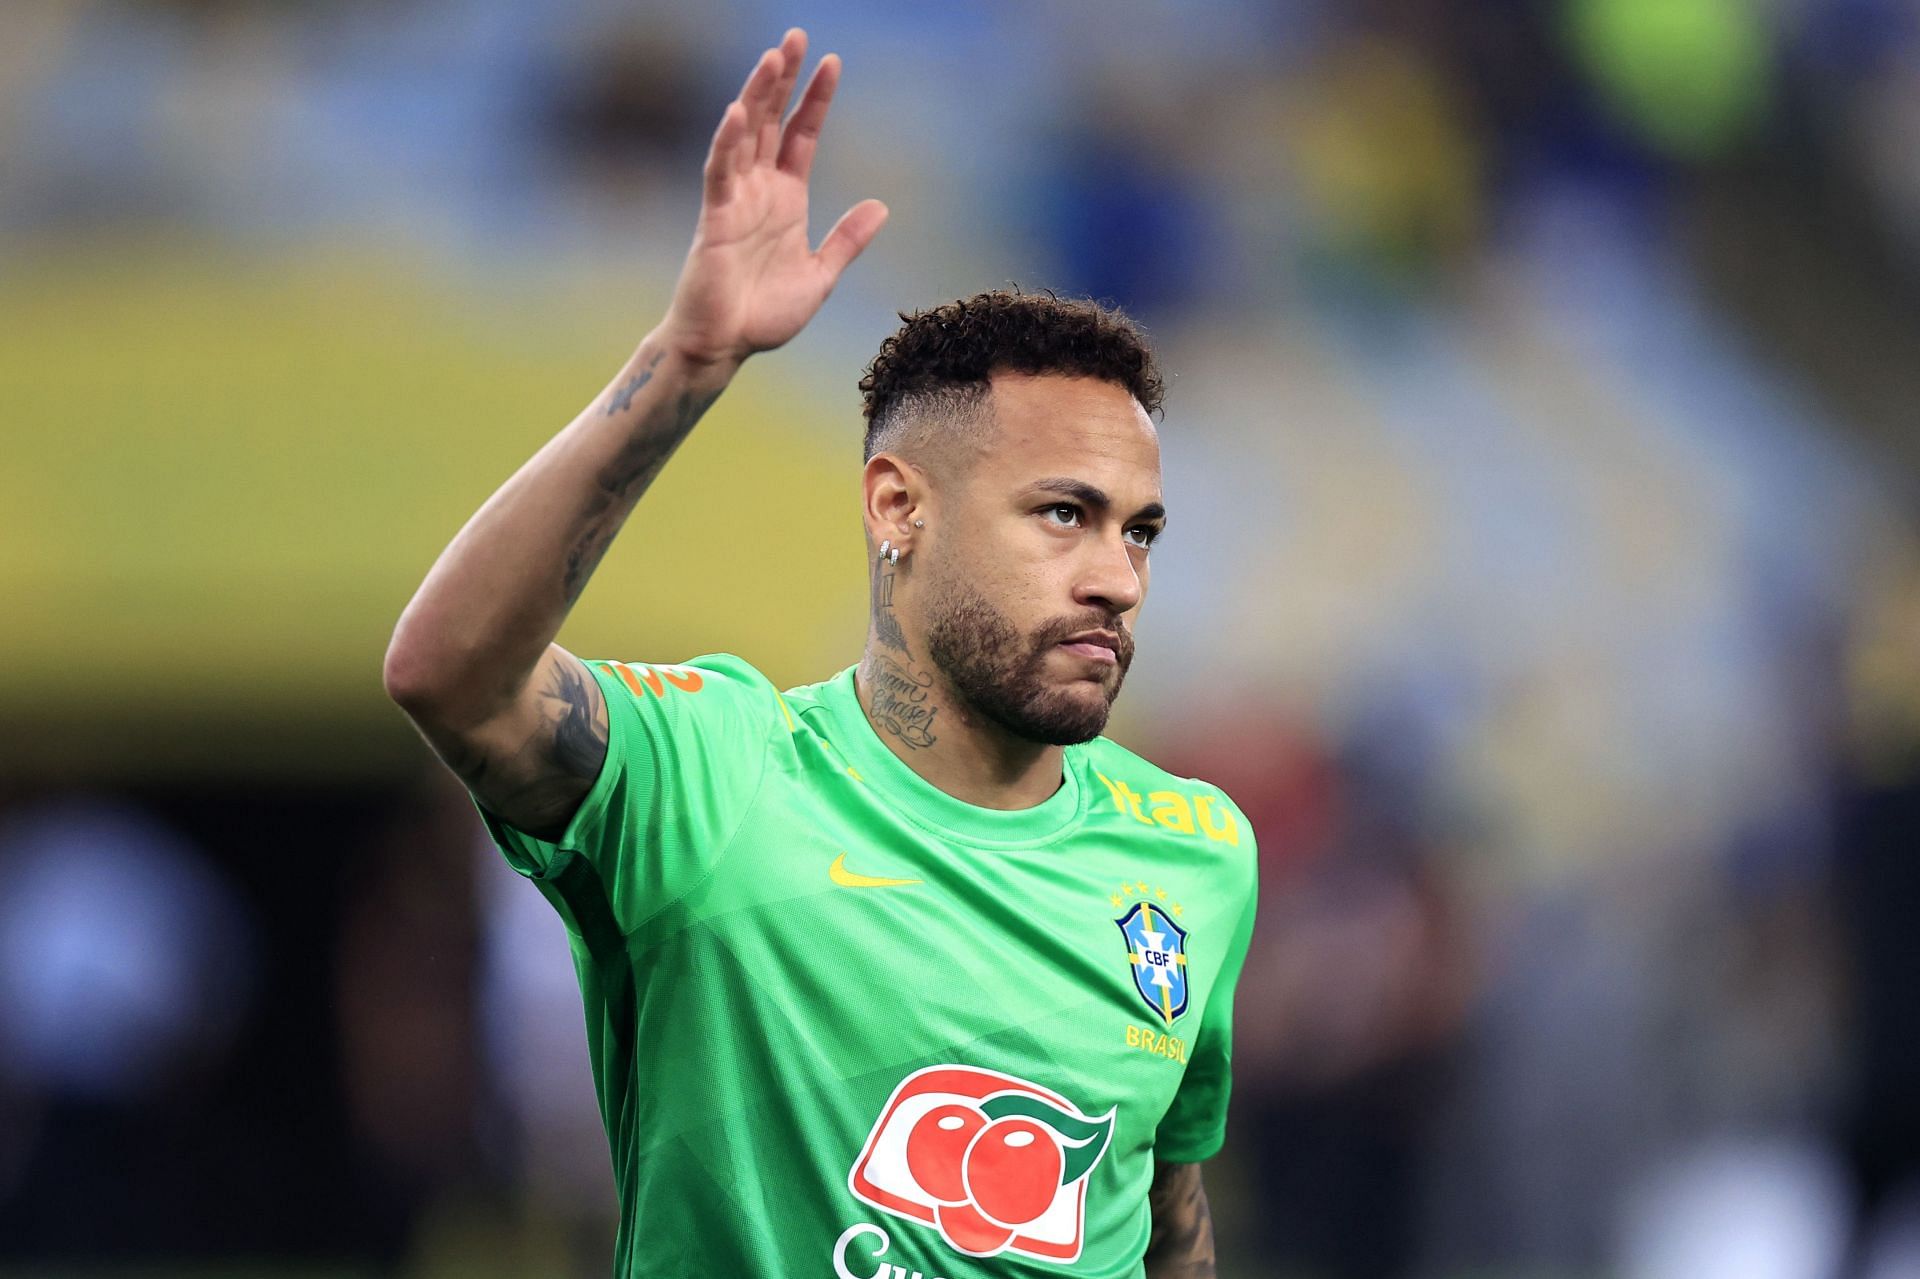 Neymar has struggled for form this season.